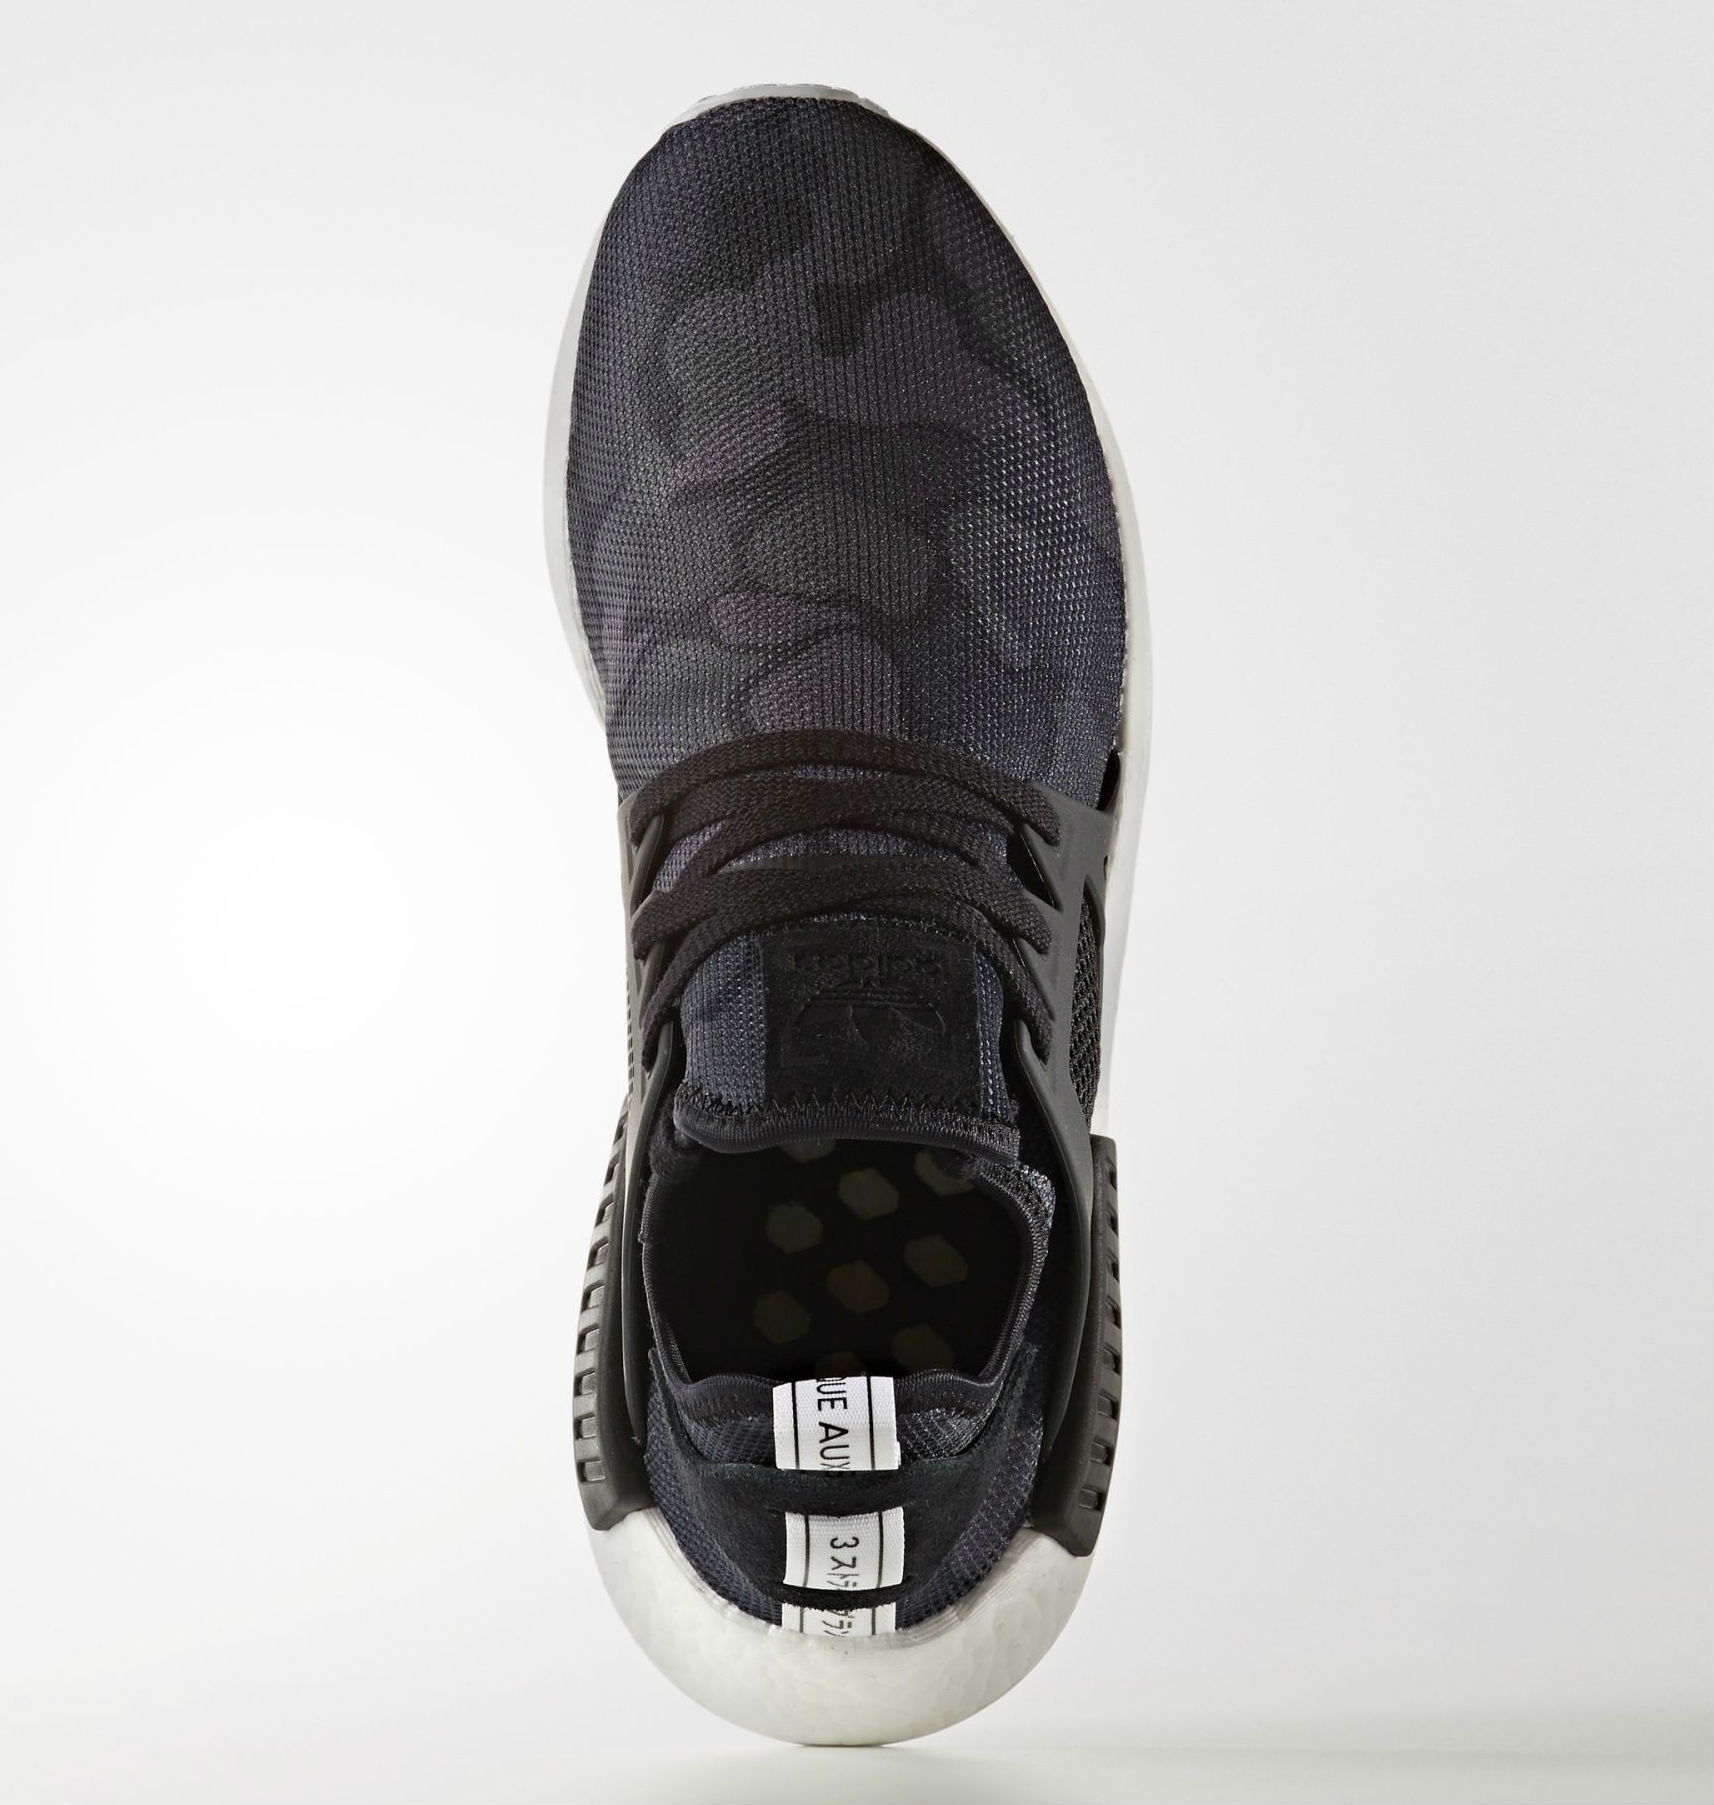 Adidas NMD XR1 Olive Sneakers kicks shoes best sneakers